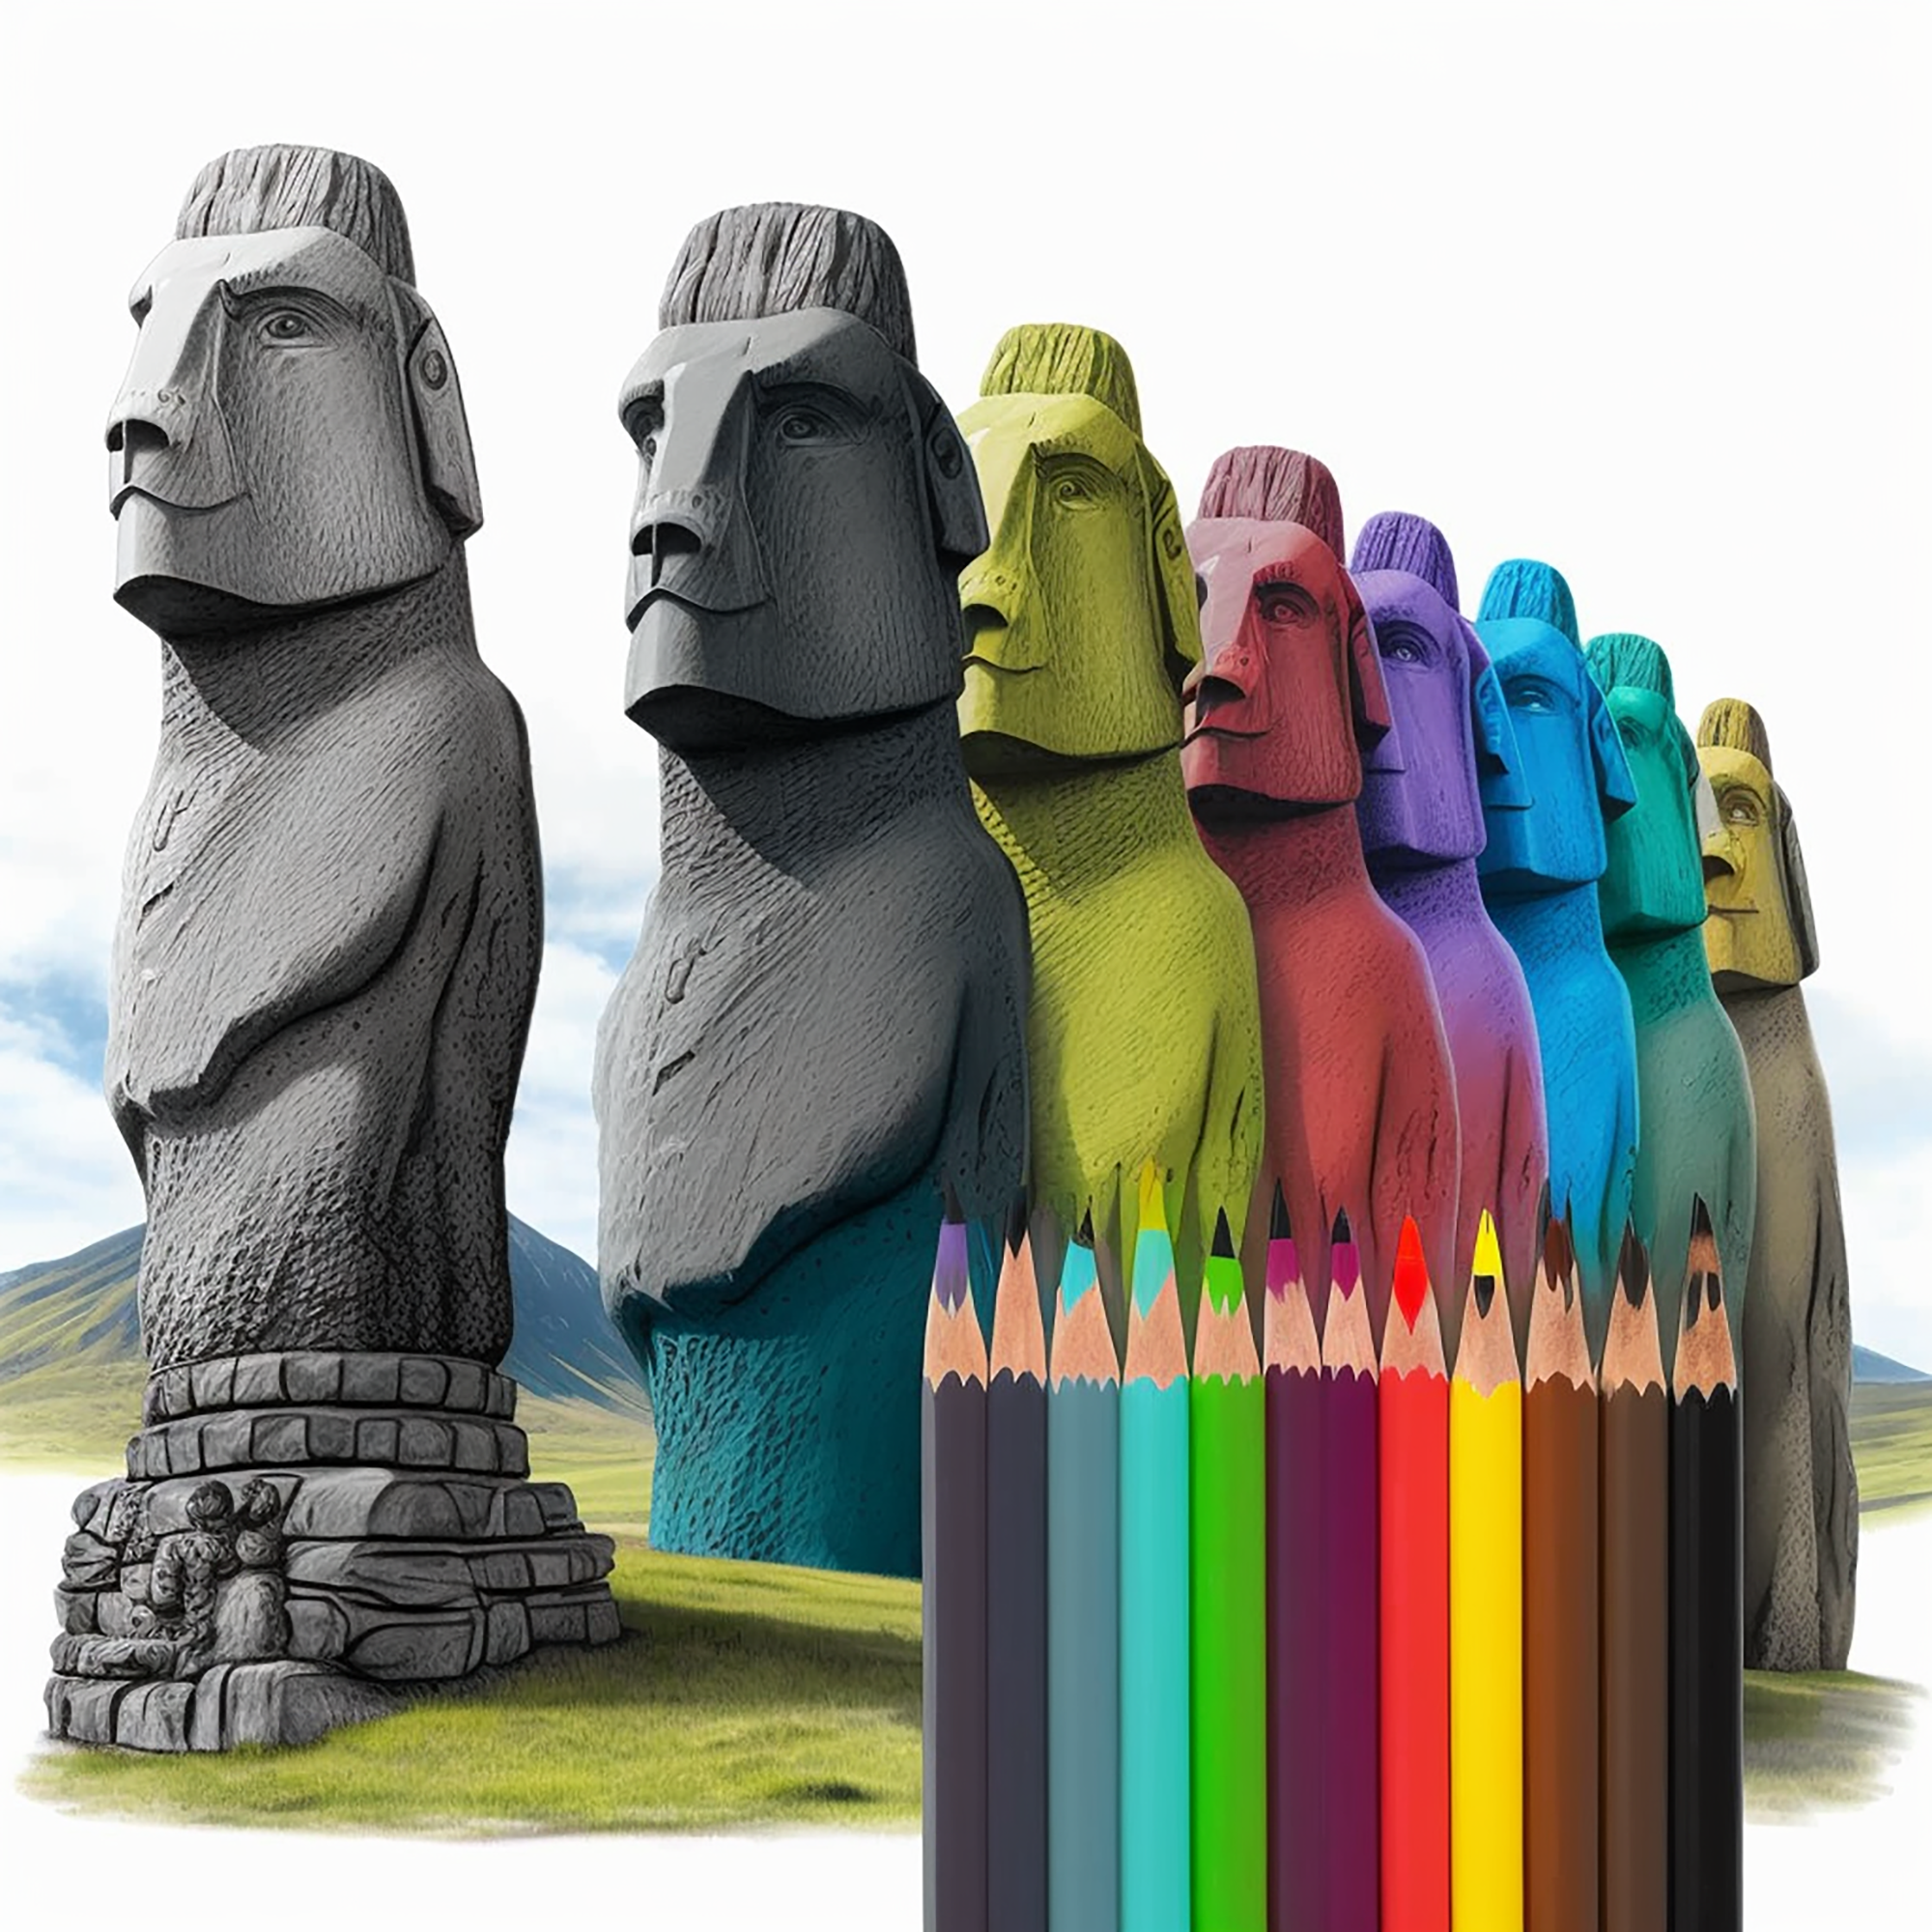 2401-Moai Statues Easter Island, coloring book